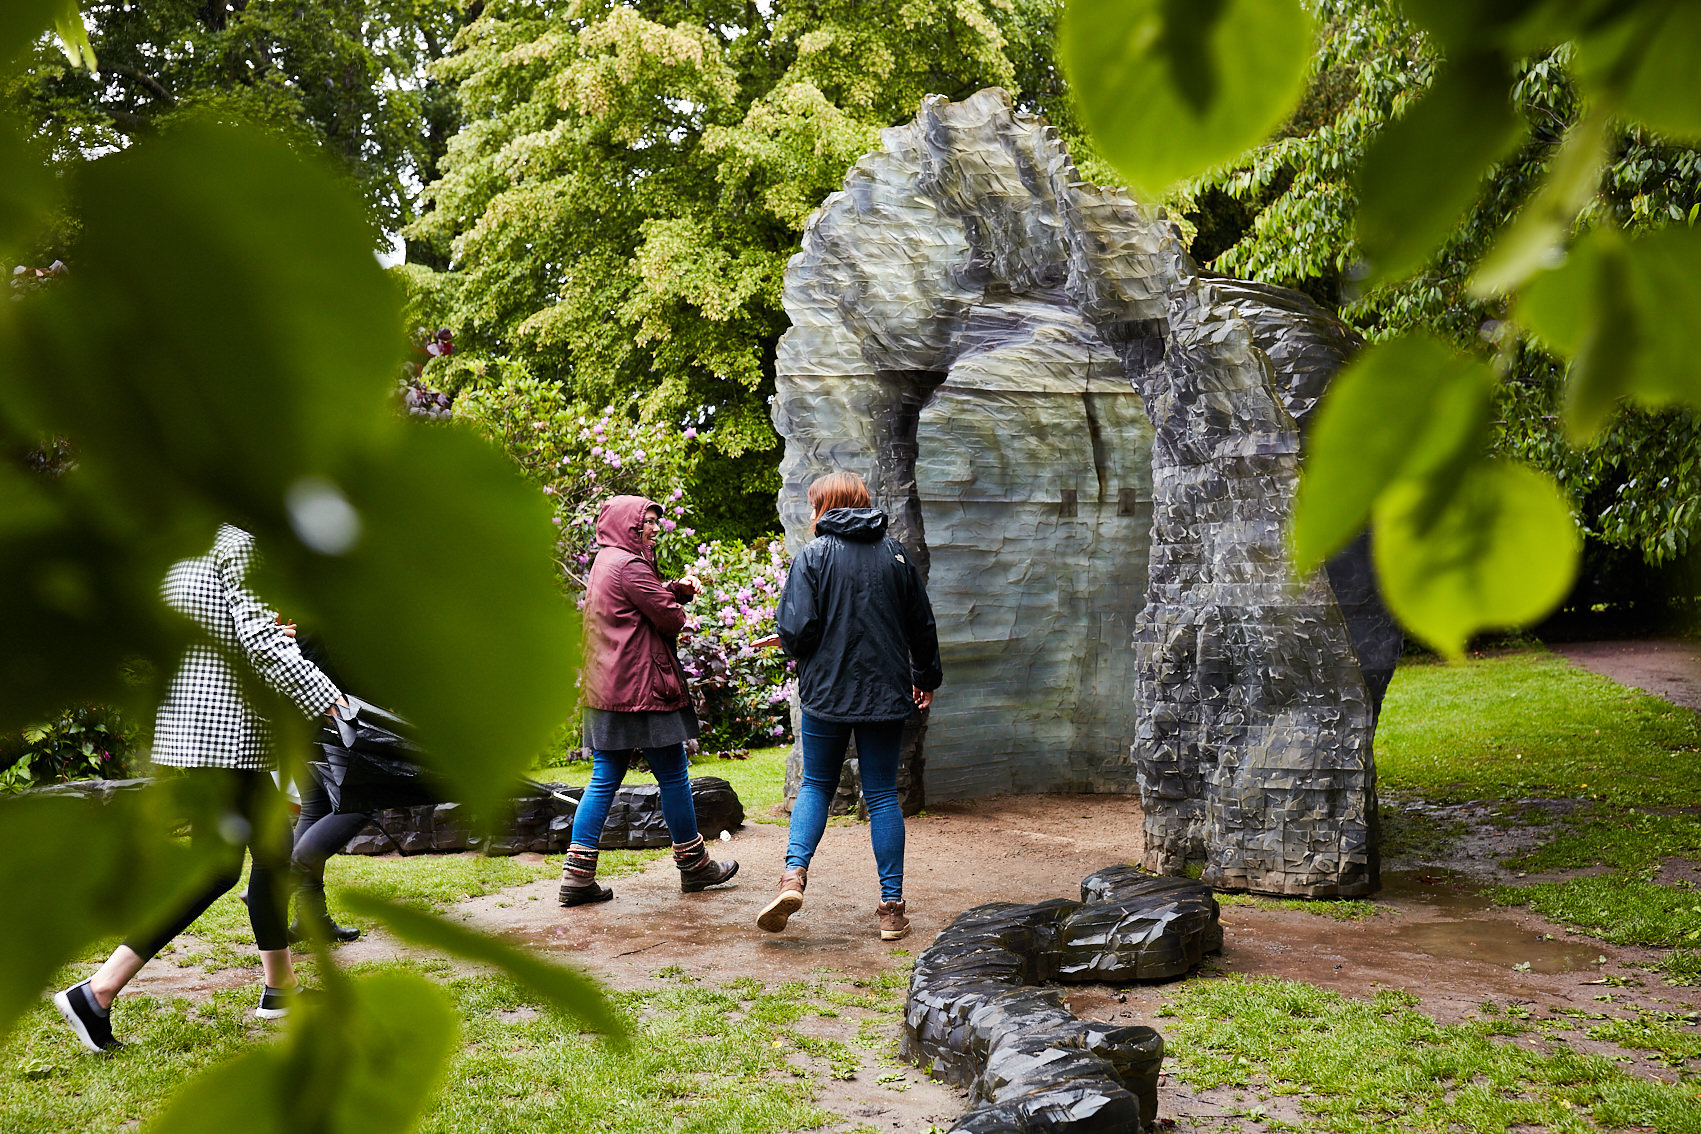 Three people in rain coats looking at an igloo-like sculpture